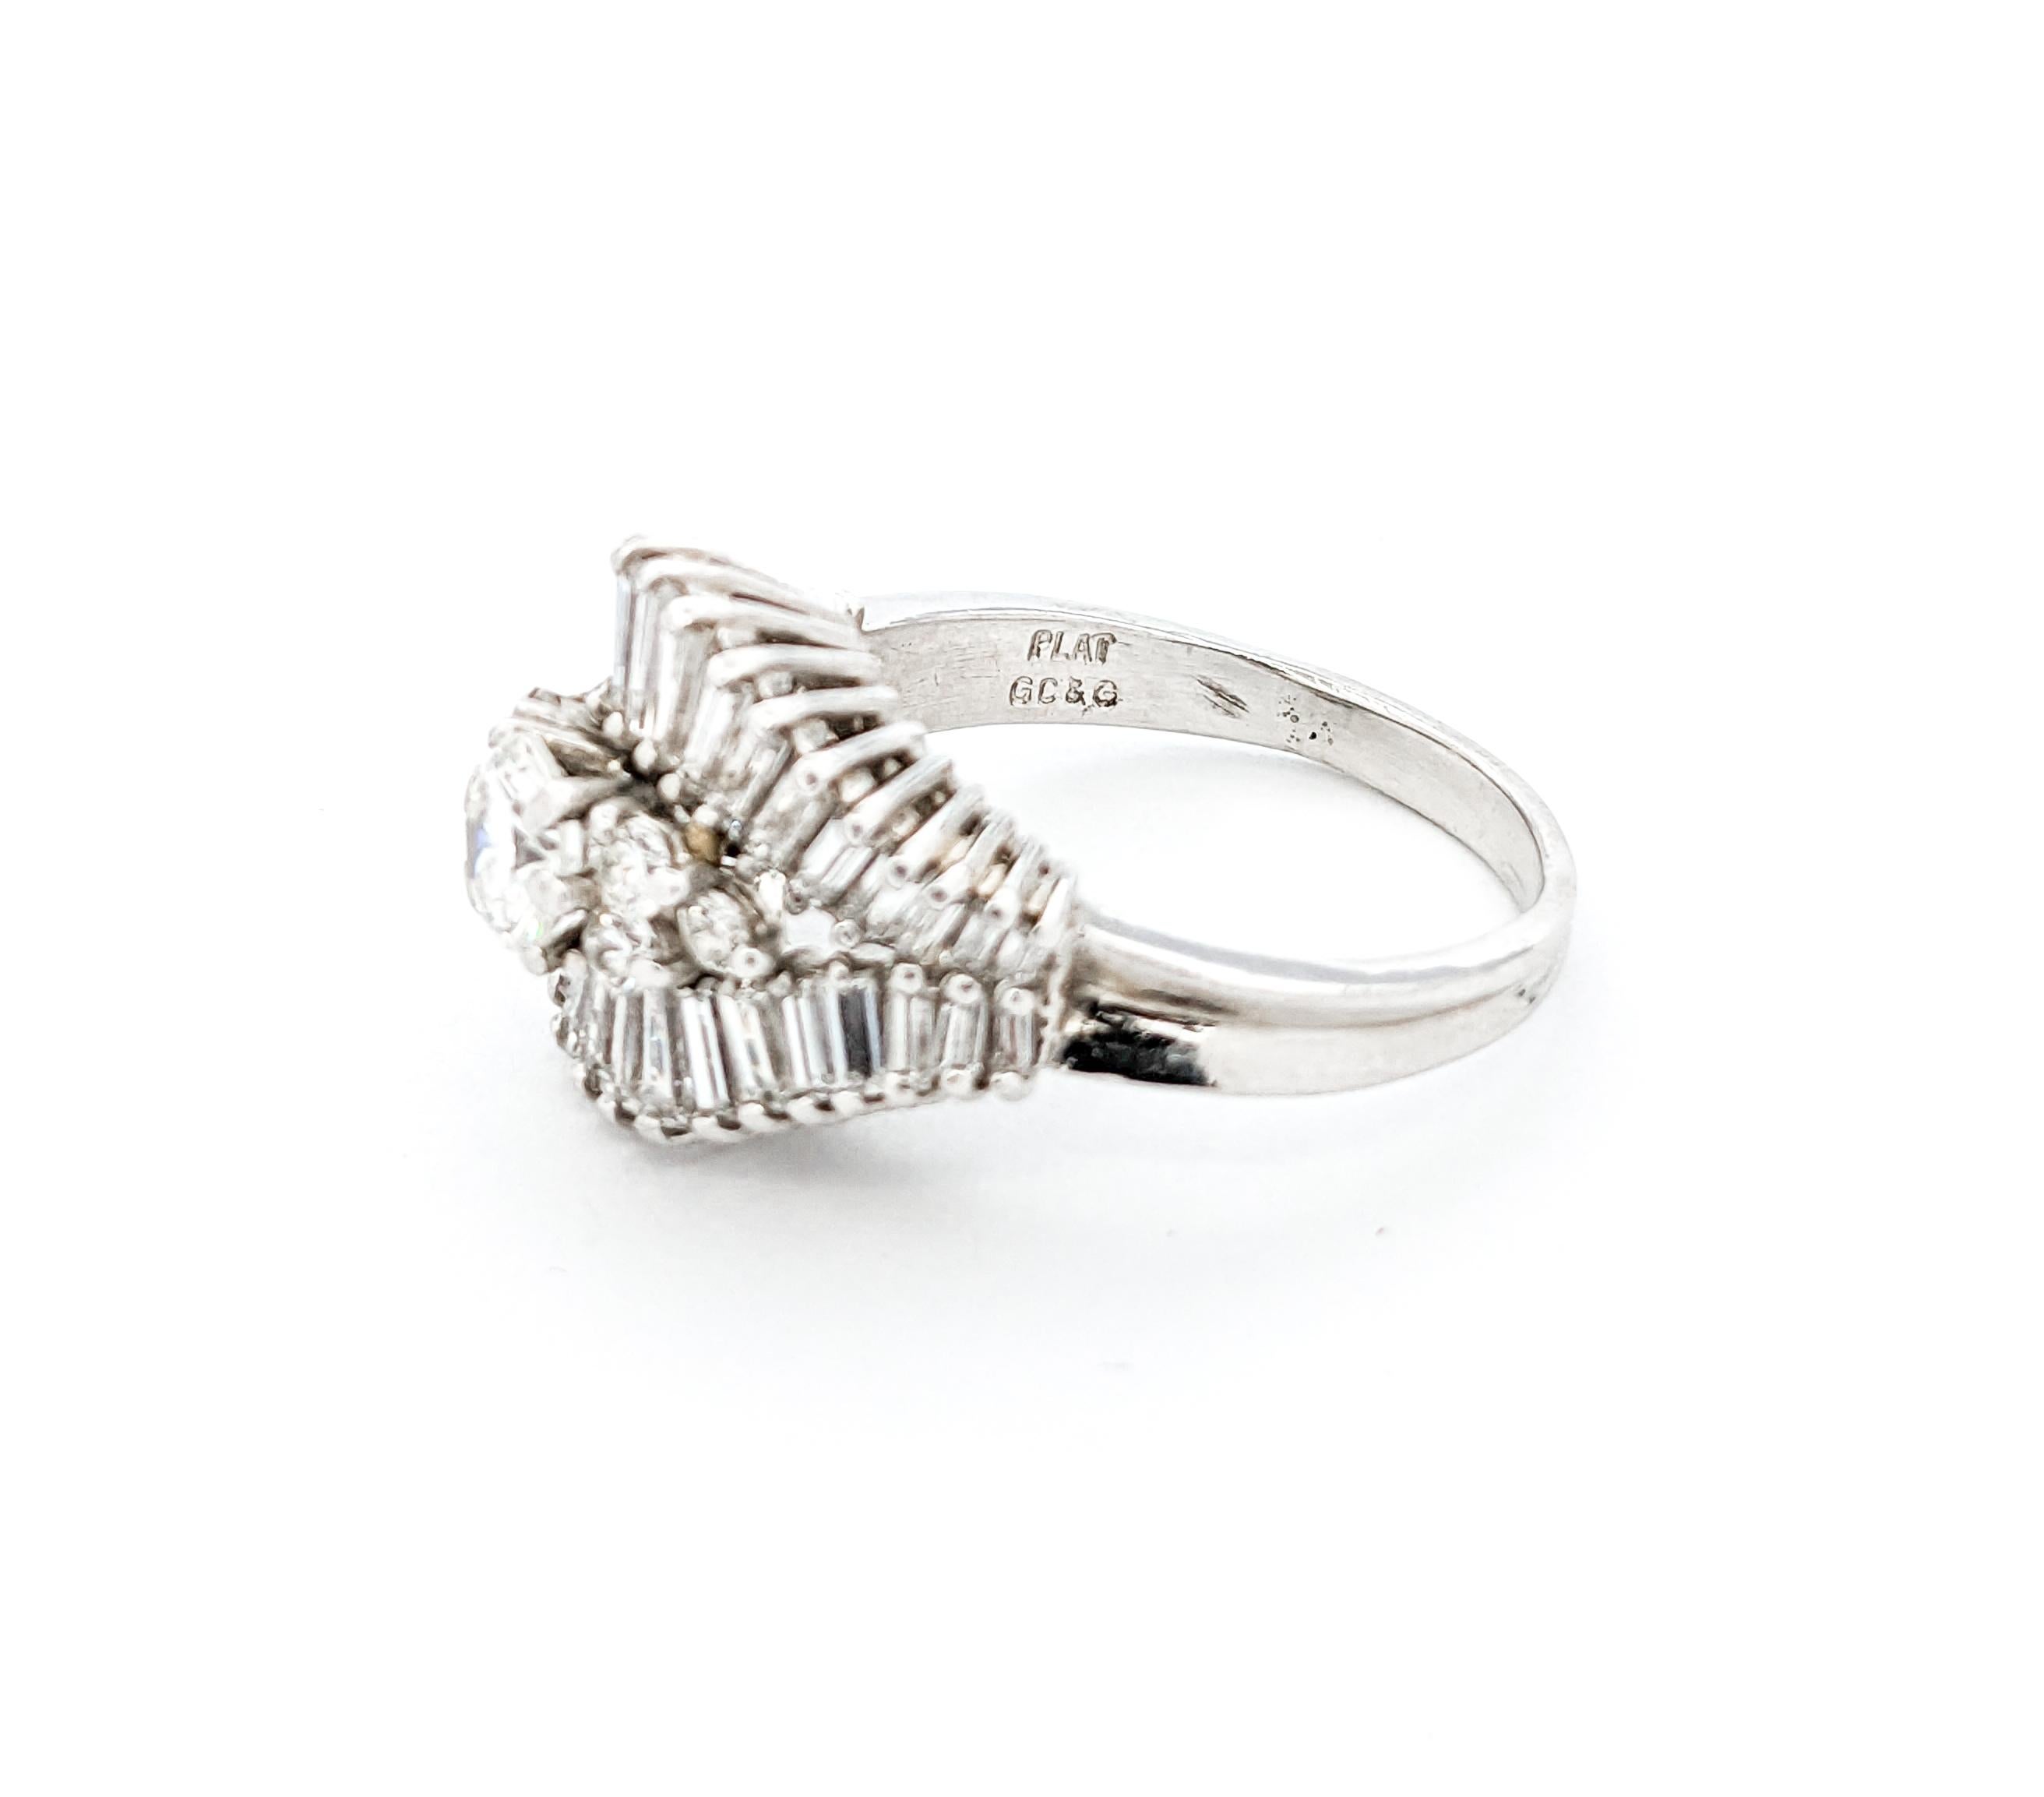 2.25ctw Diamond Fashion Ring in Platinum For Sale 1